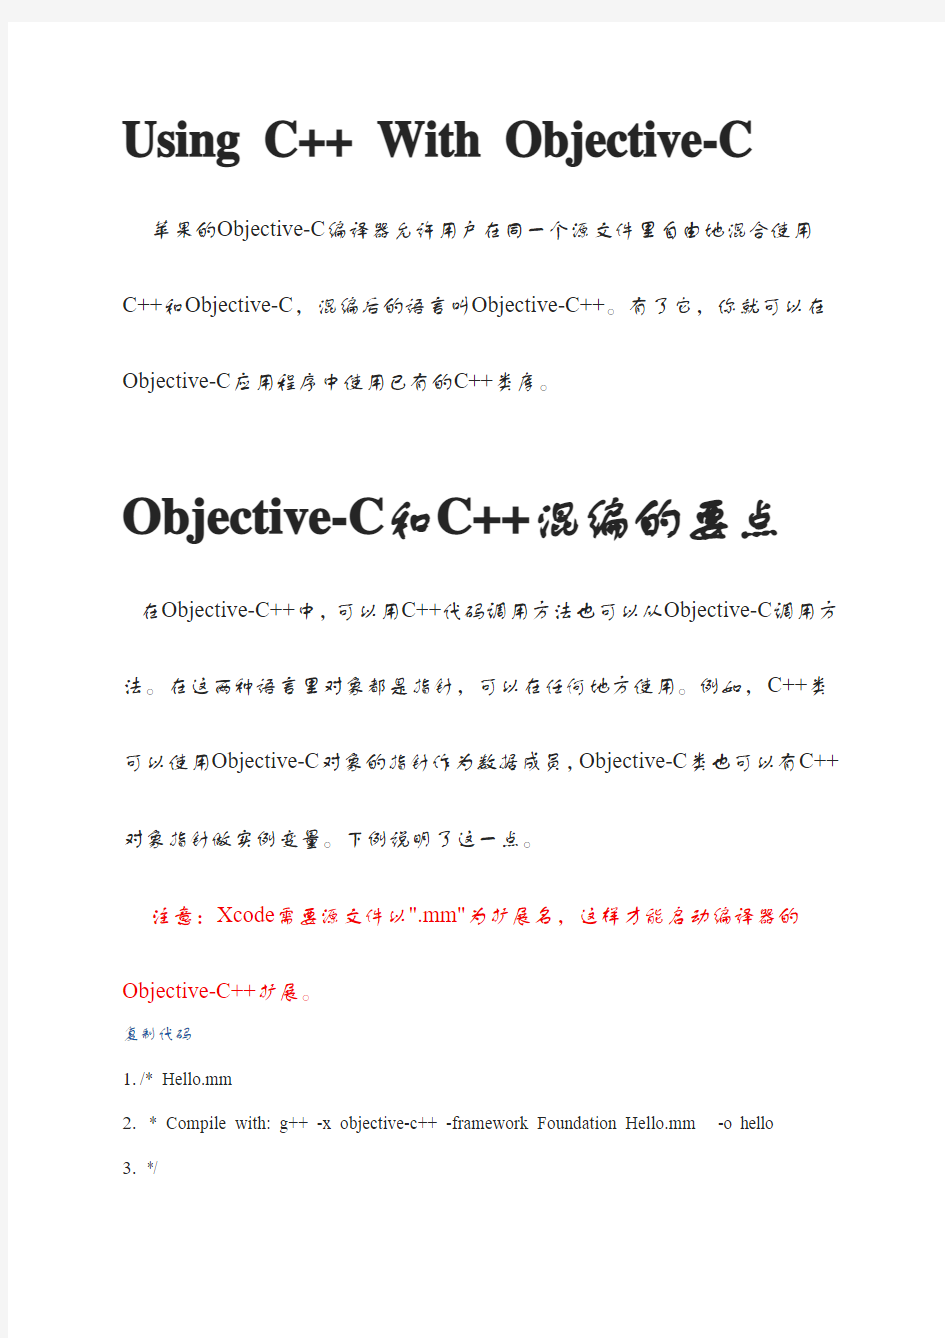 Objective-C和C++混编的要点